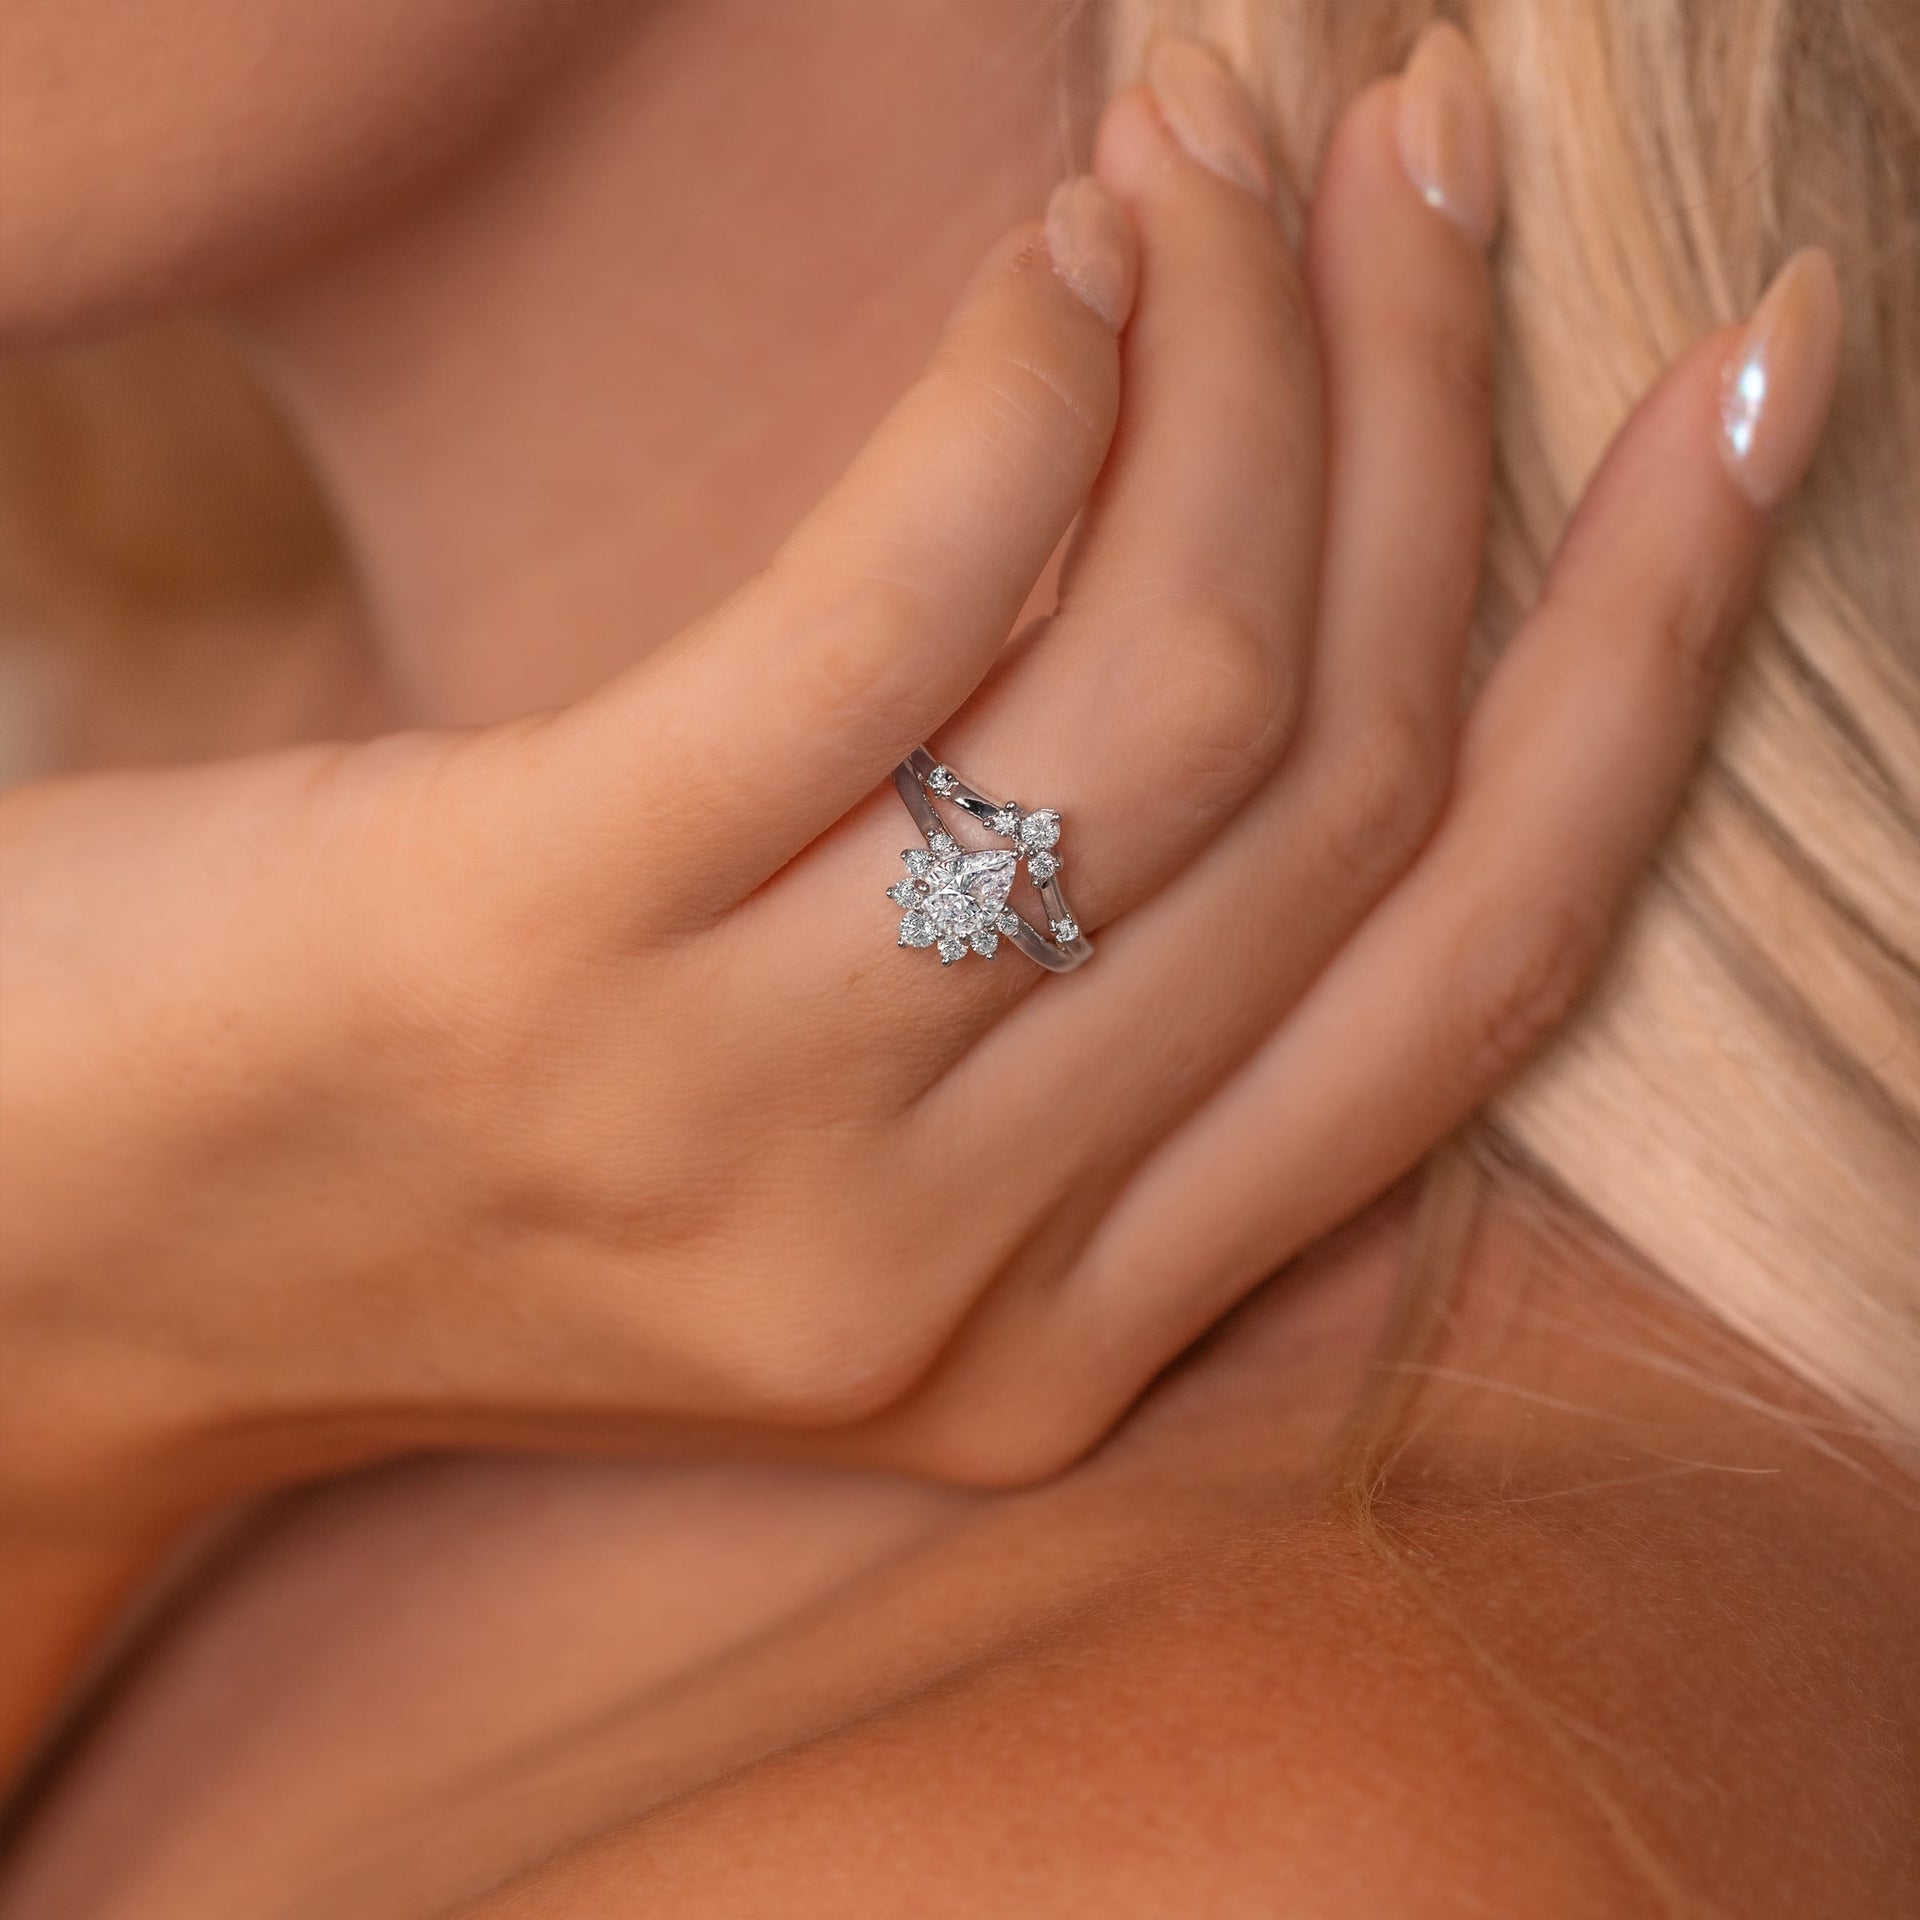 The Zara pear cut boho style ring